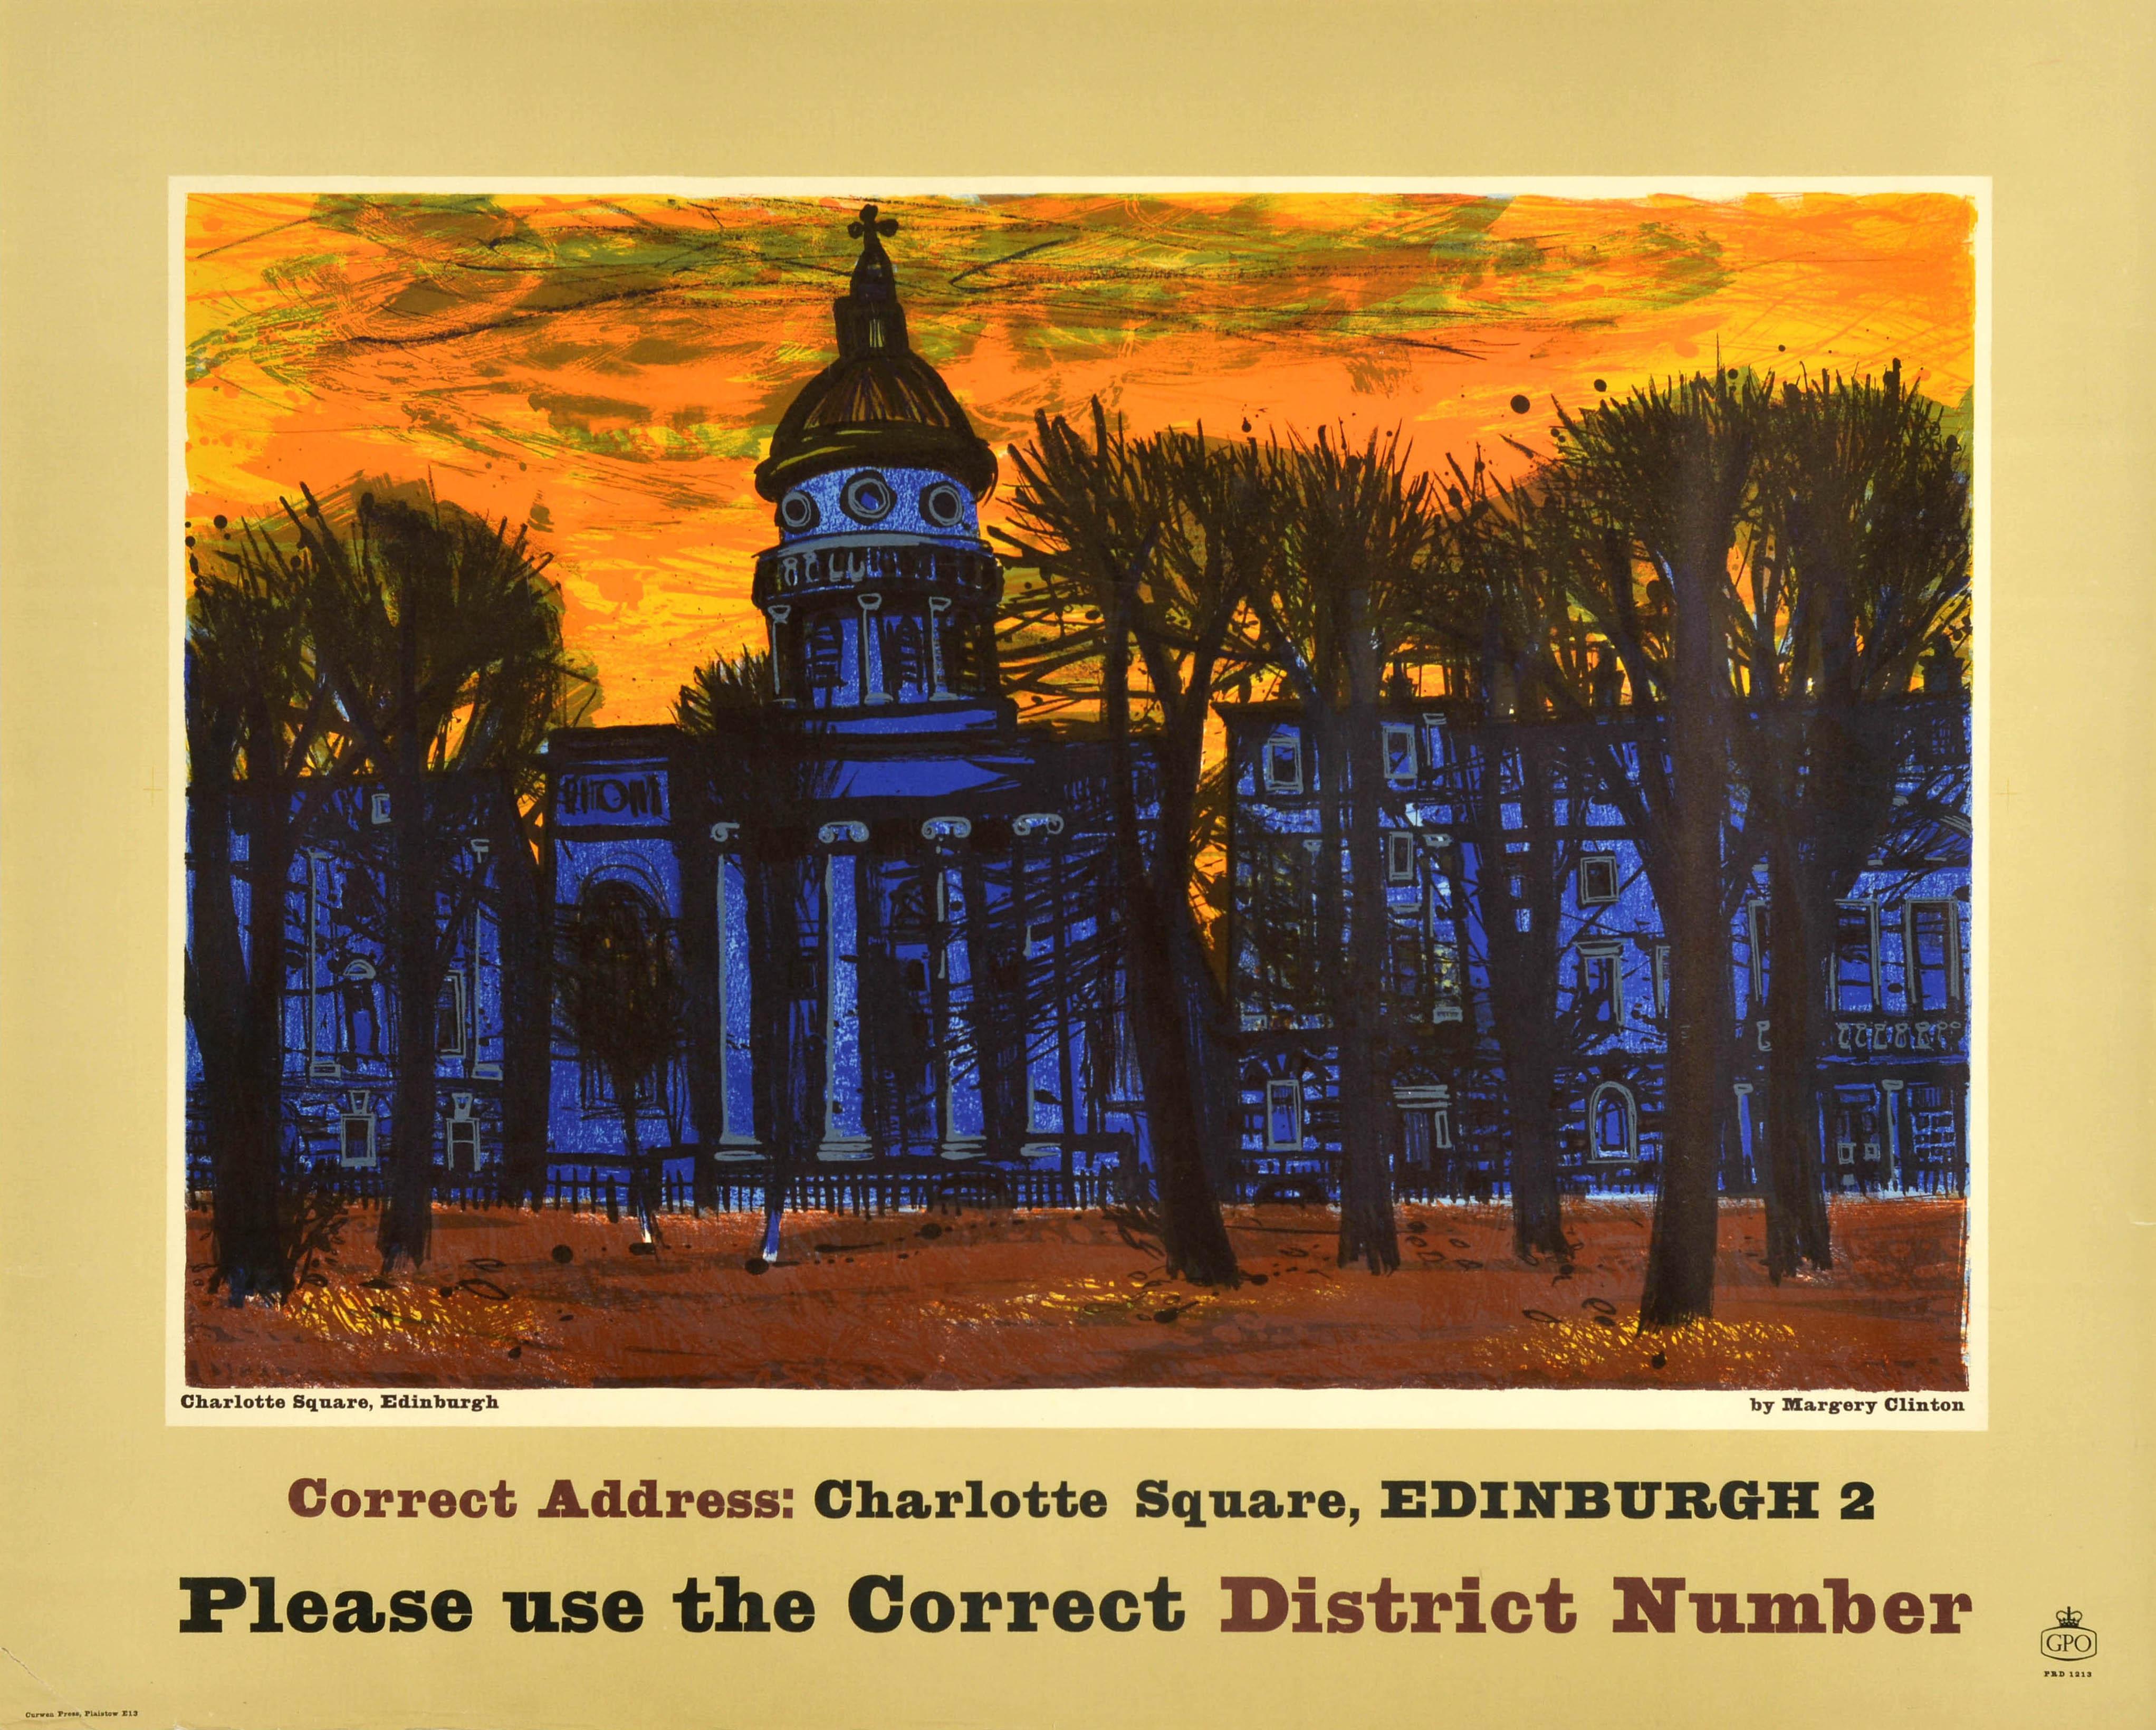 Margery Clinton Print - Original Vintage Post Office Advertising Poster Charlotte Square Edinburgh GPO